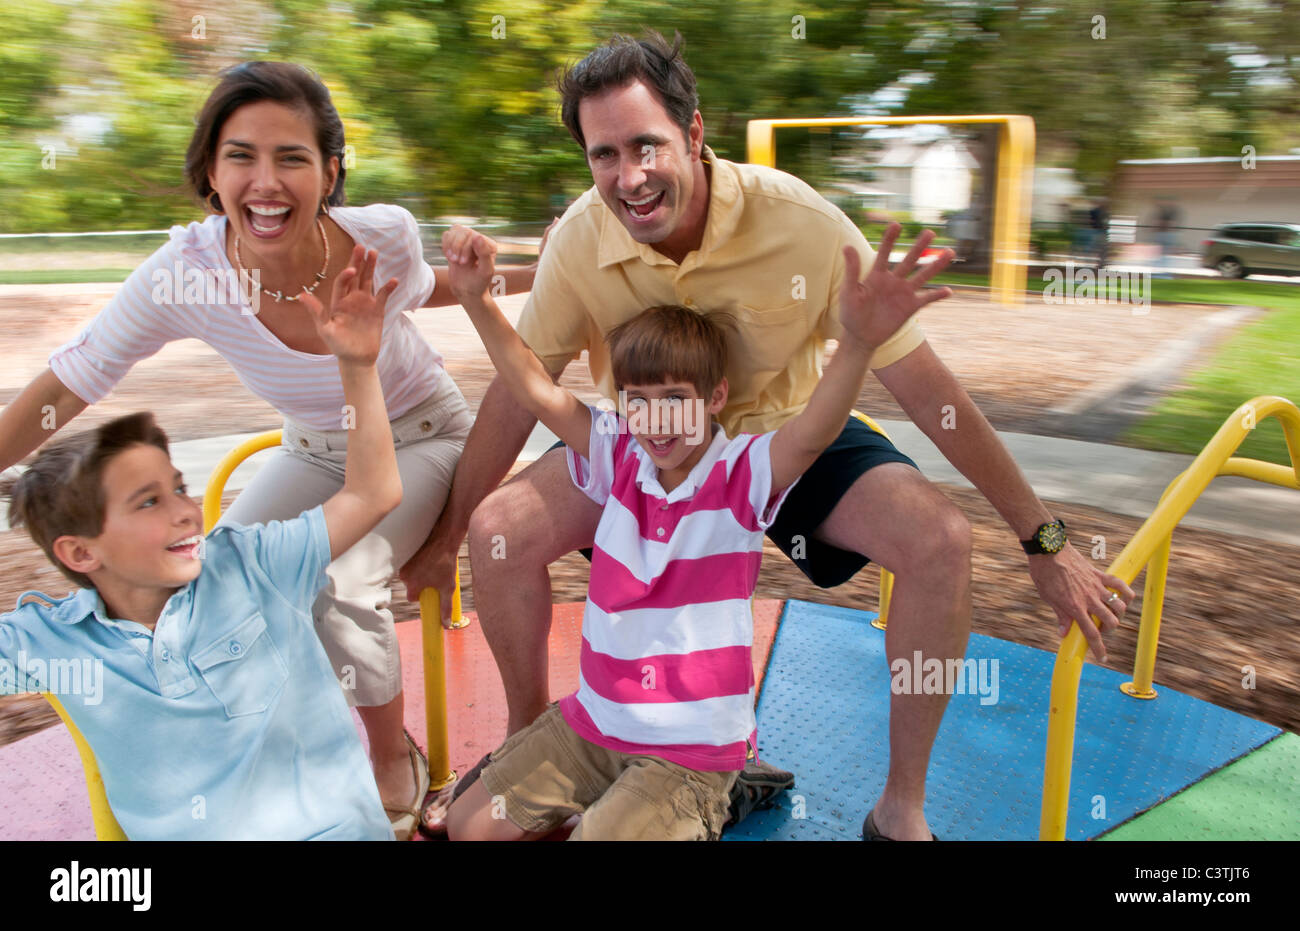 Hispanic Families Having Fun